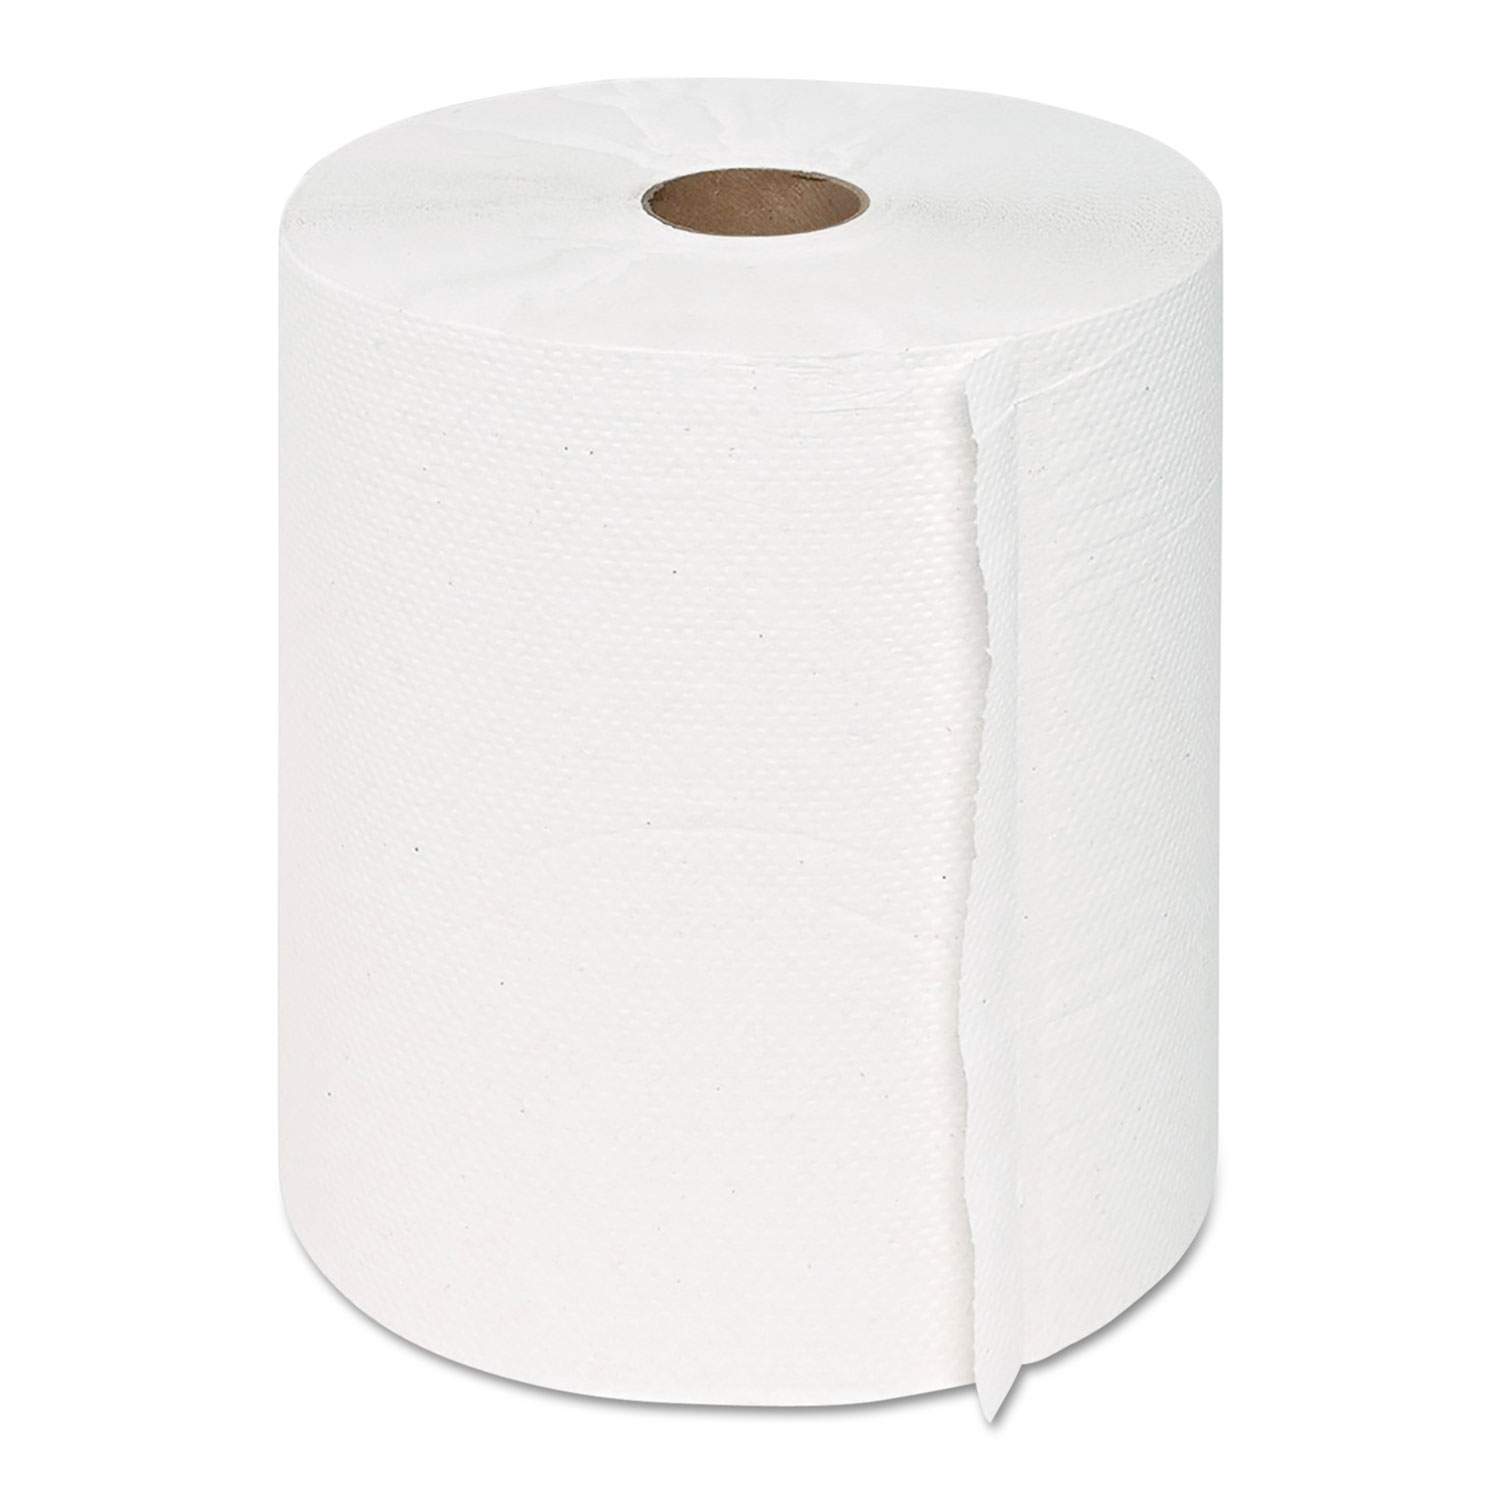  GEN GEN1915 Hardwound Roll Towels, 1-Ply, White, 8 x 600 ft, 12 Rolls/Carton (GEN1915) 